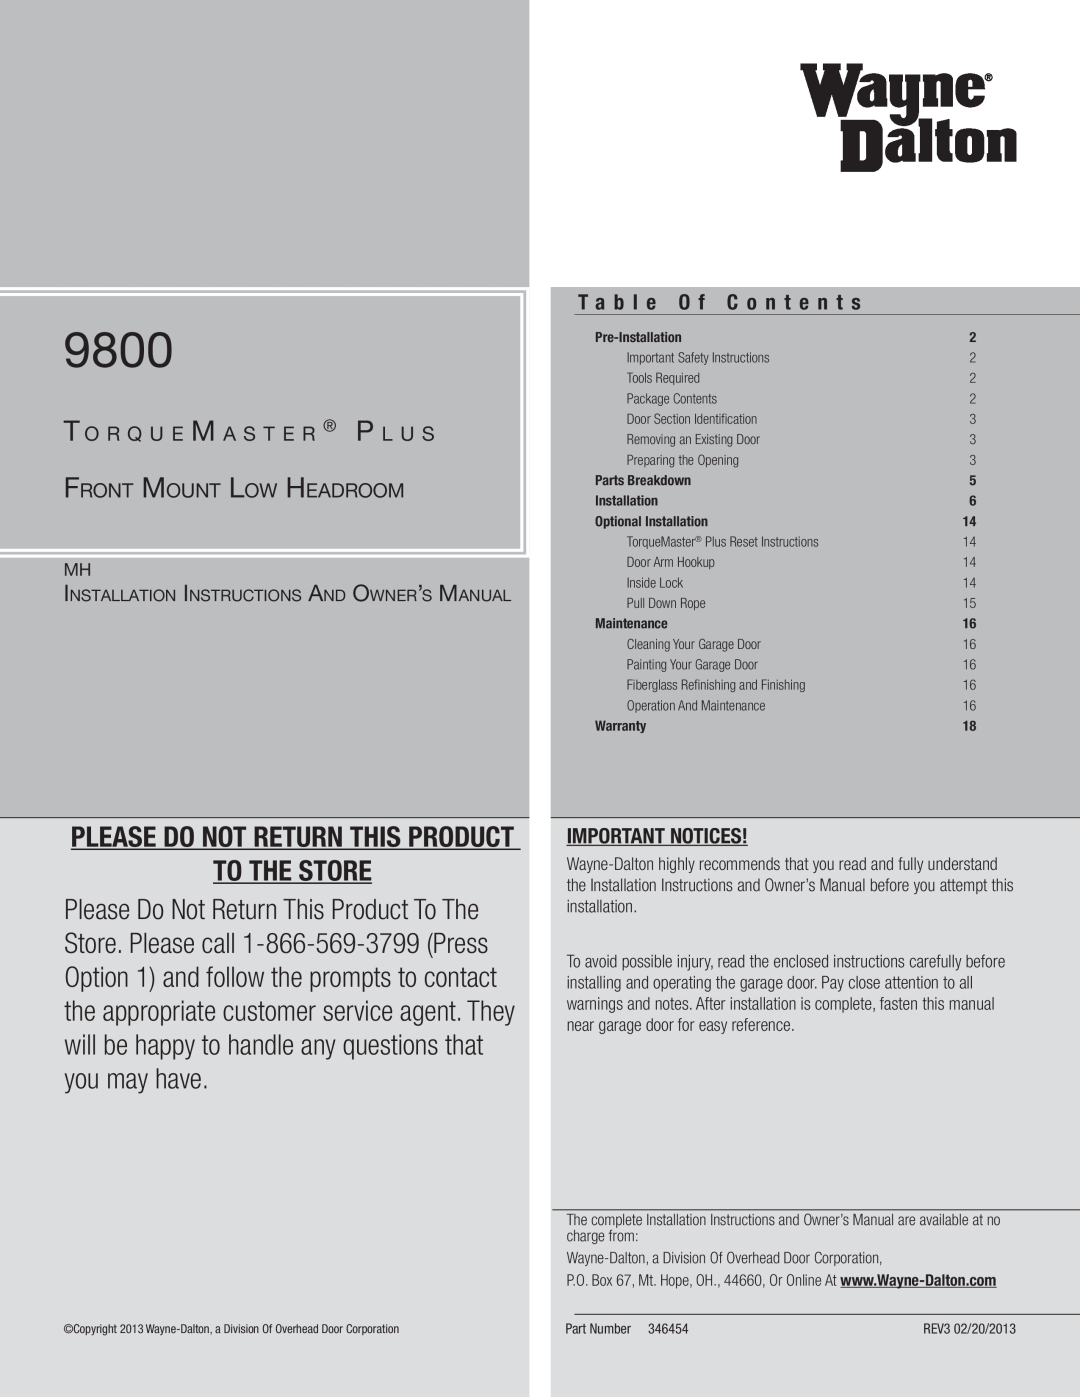 Wayne-Dalton 9800 installation instructions Series - 4 Section 